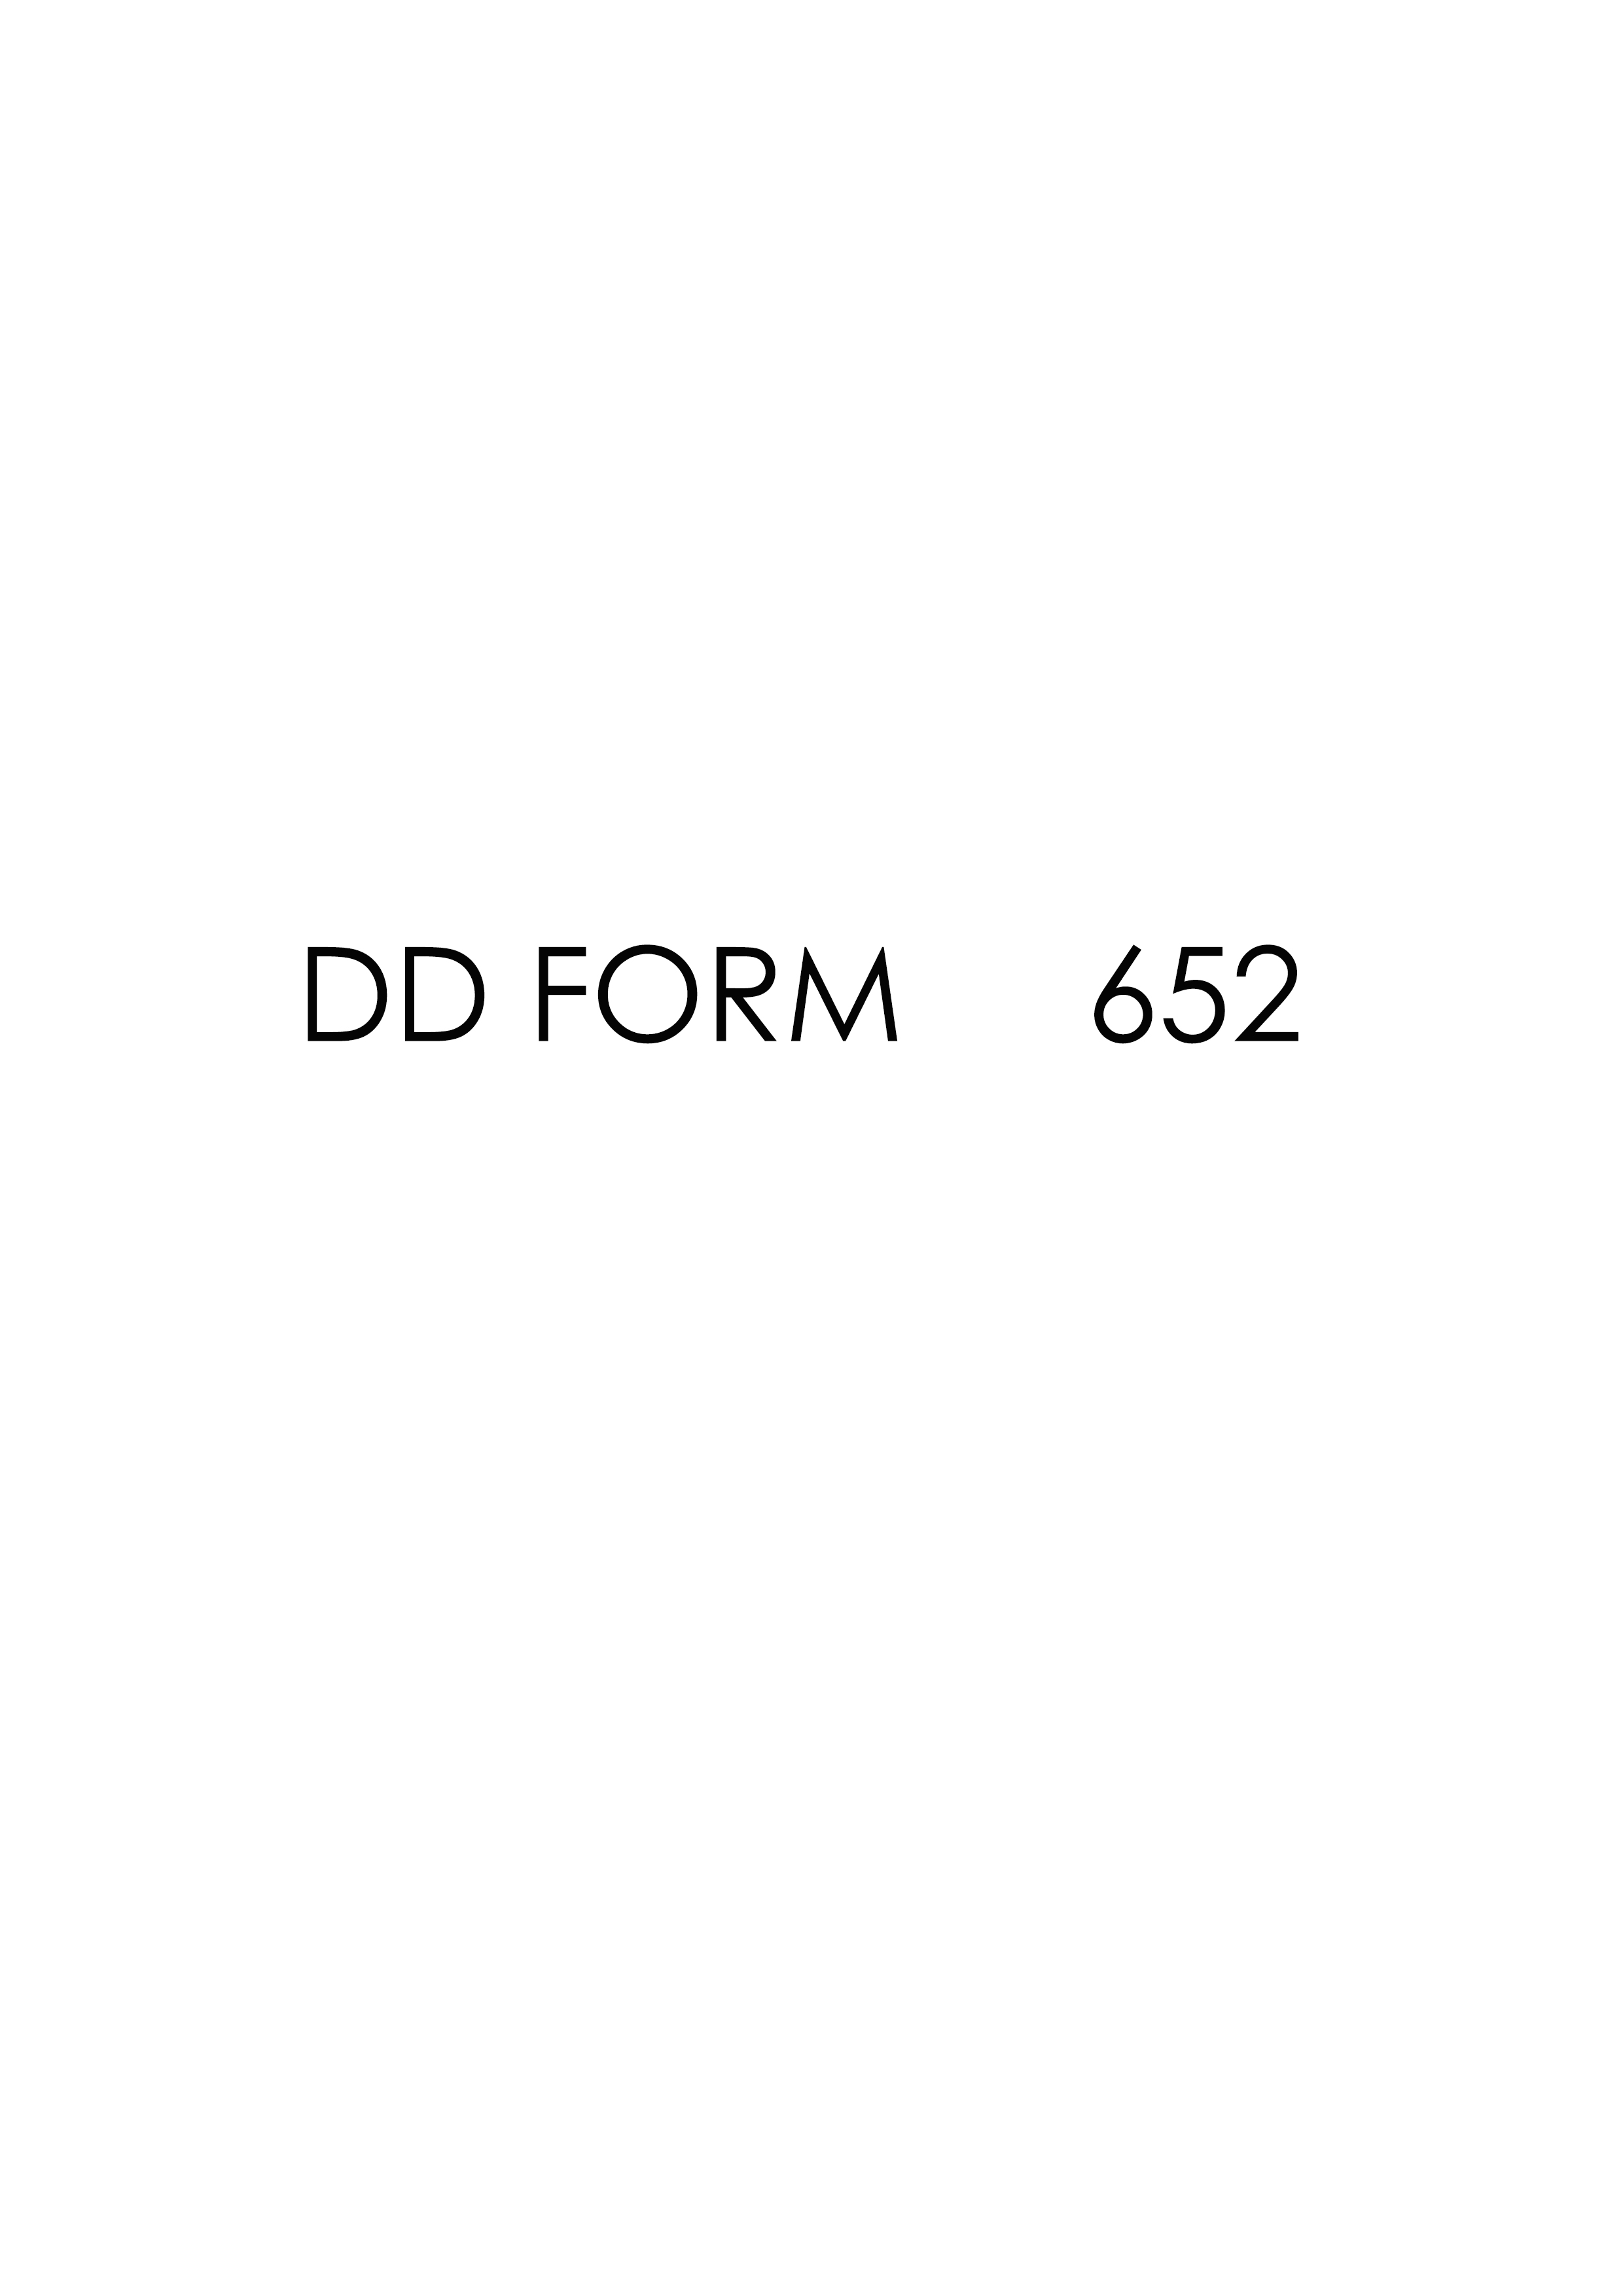 Download dd form 652